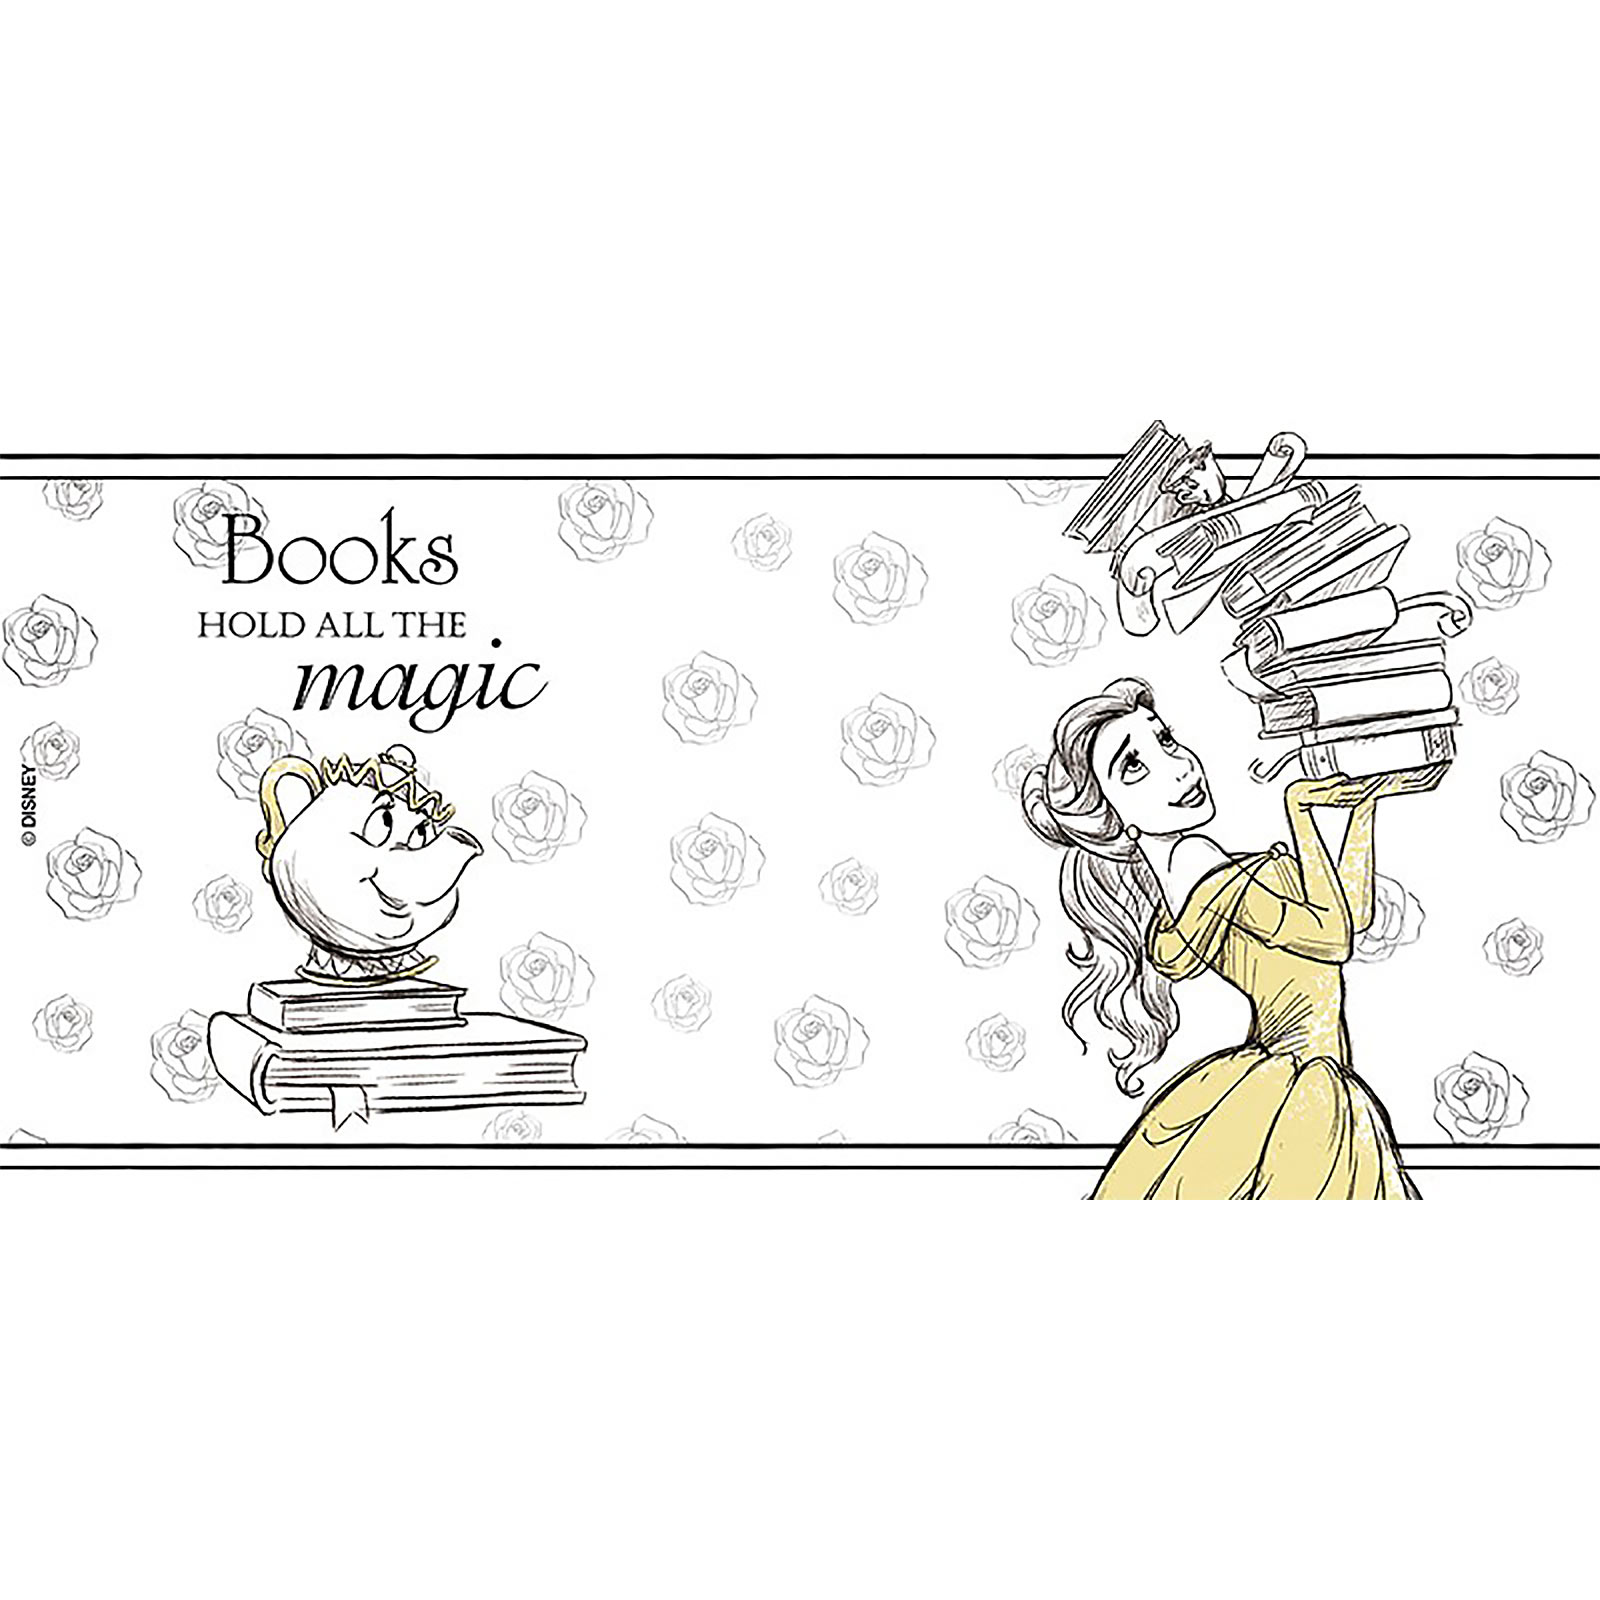 La Belle et la Bête - Books Hold Magic Mug